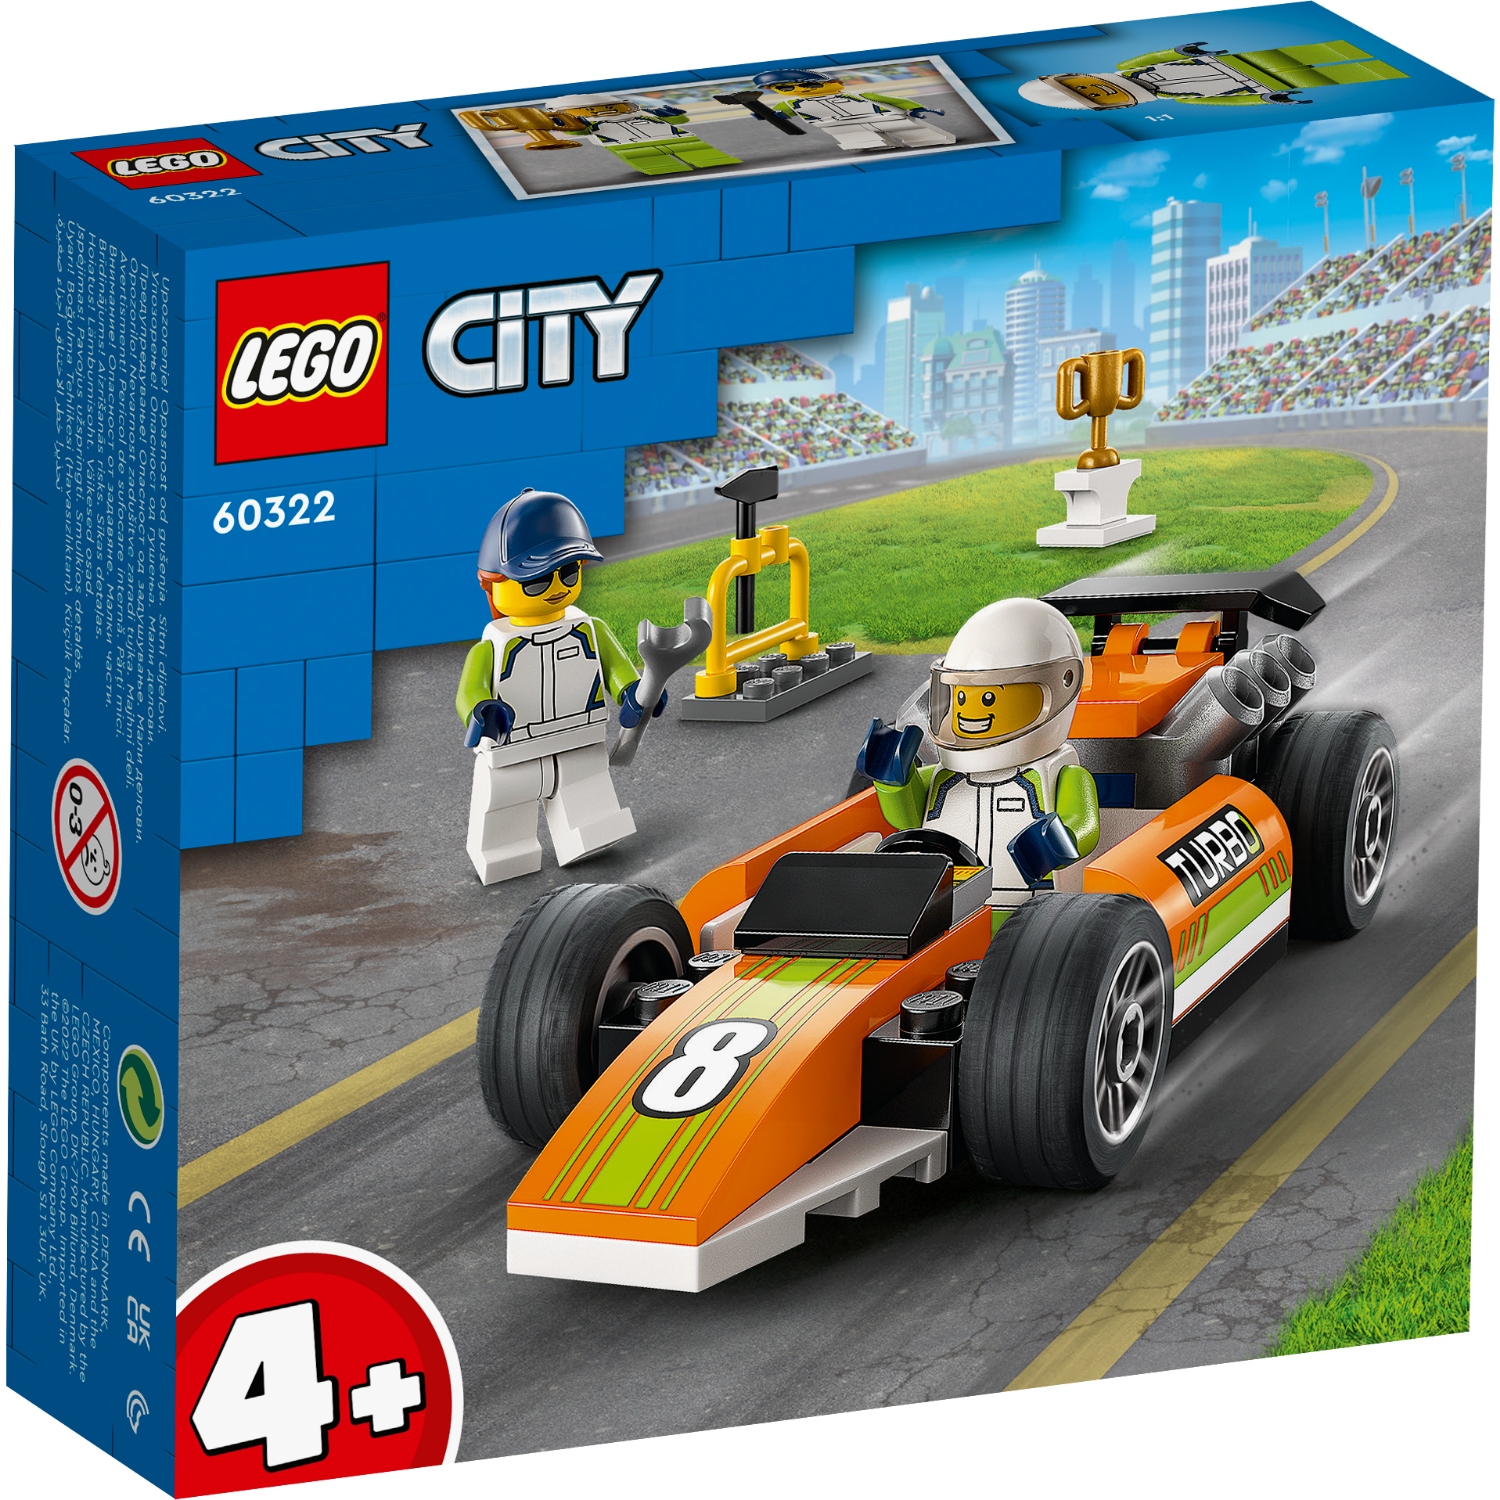 LEGO CITY 60322 RACEWAGEN - 411 7117 - 527093